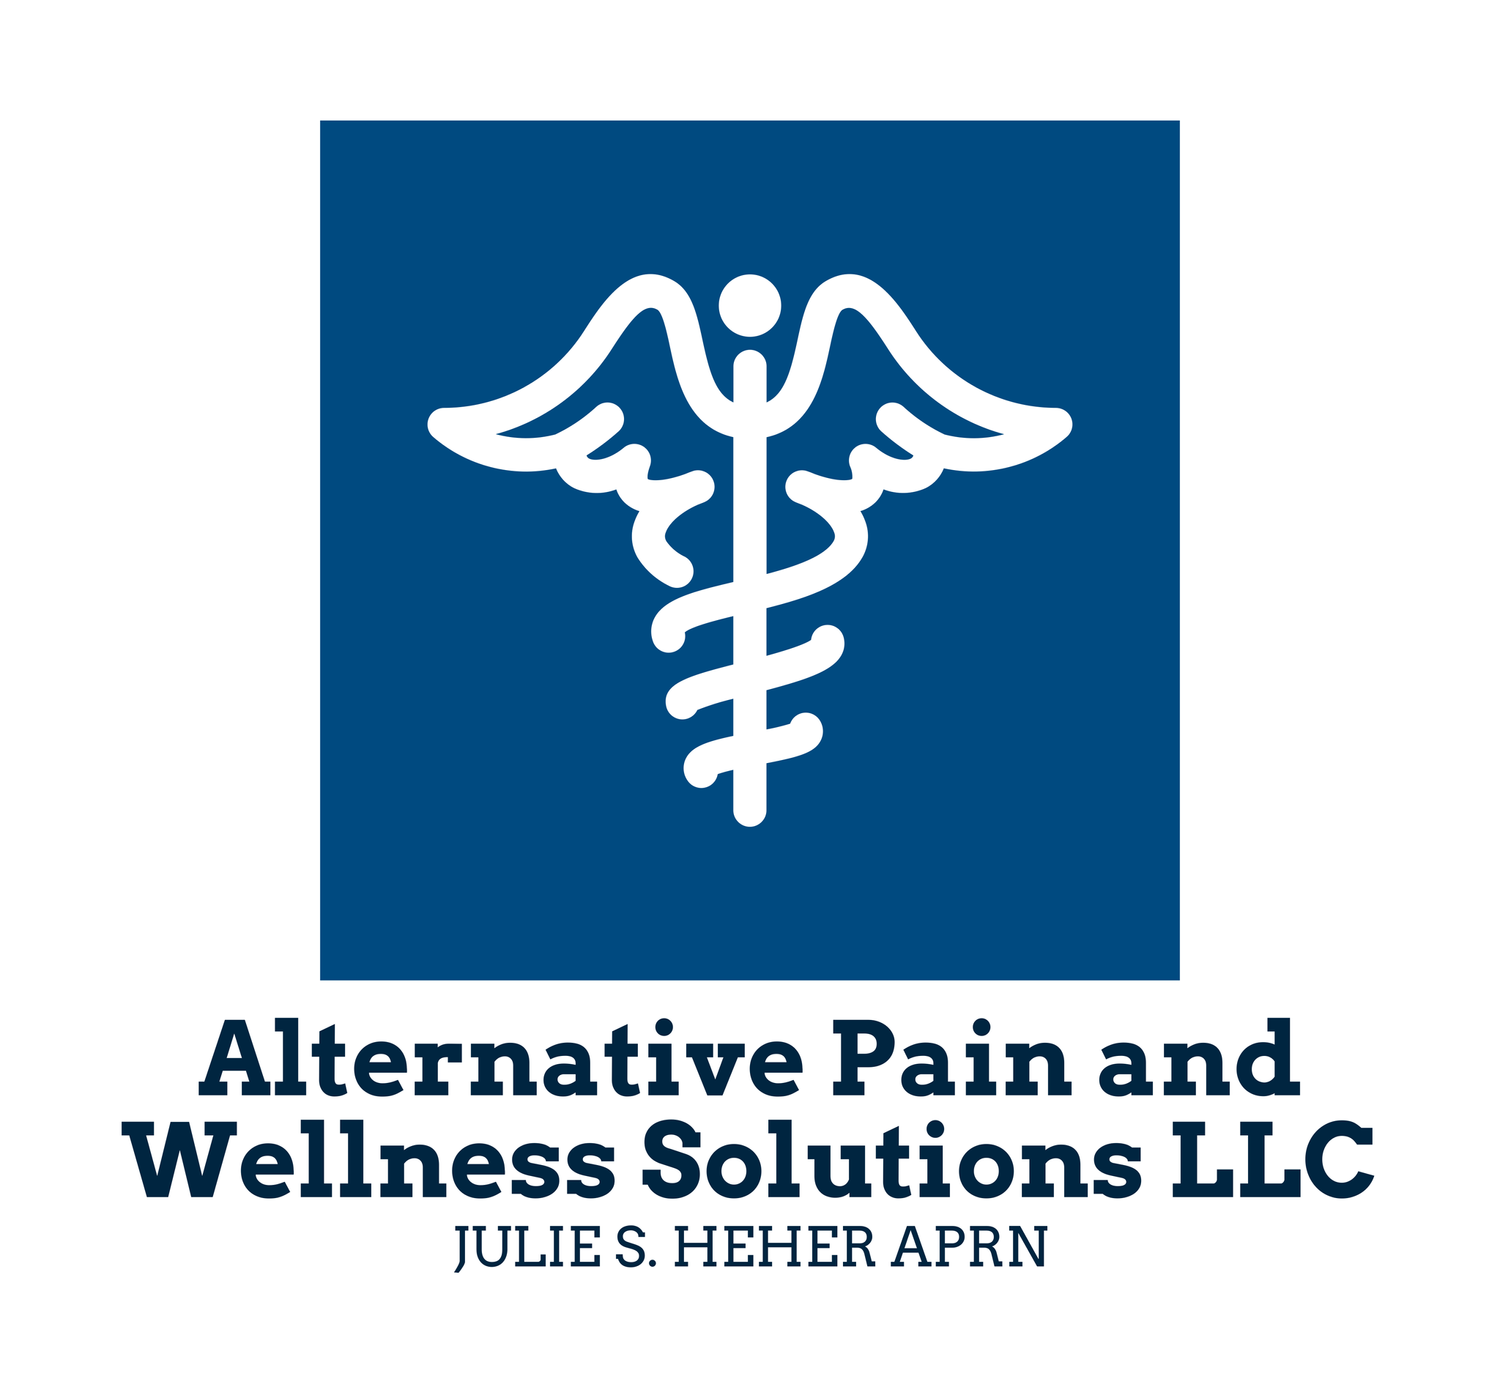 Alternative Pain and Wellness Solutions, LLC